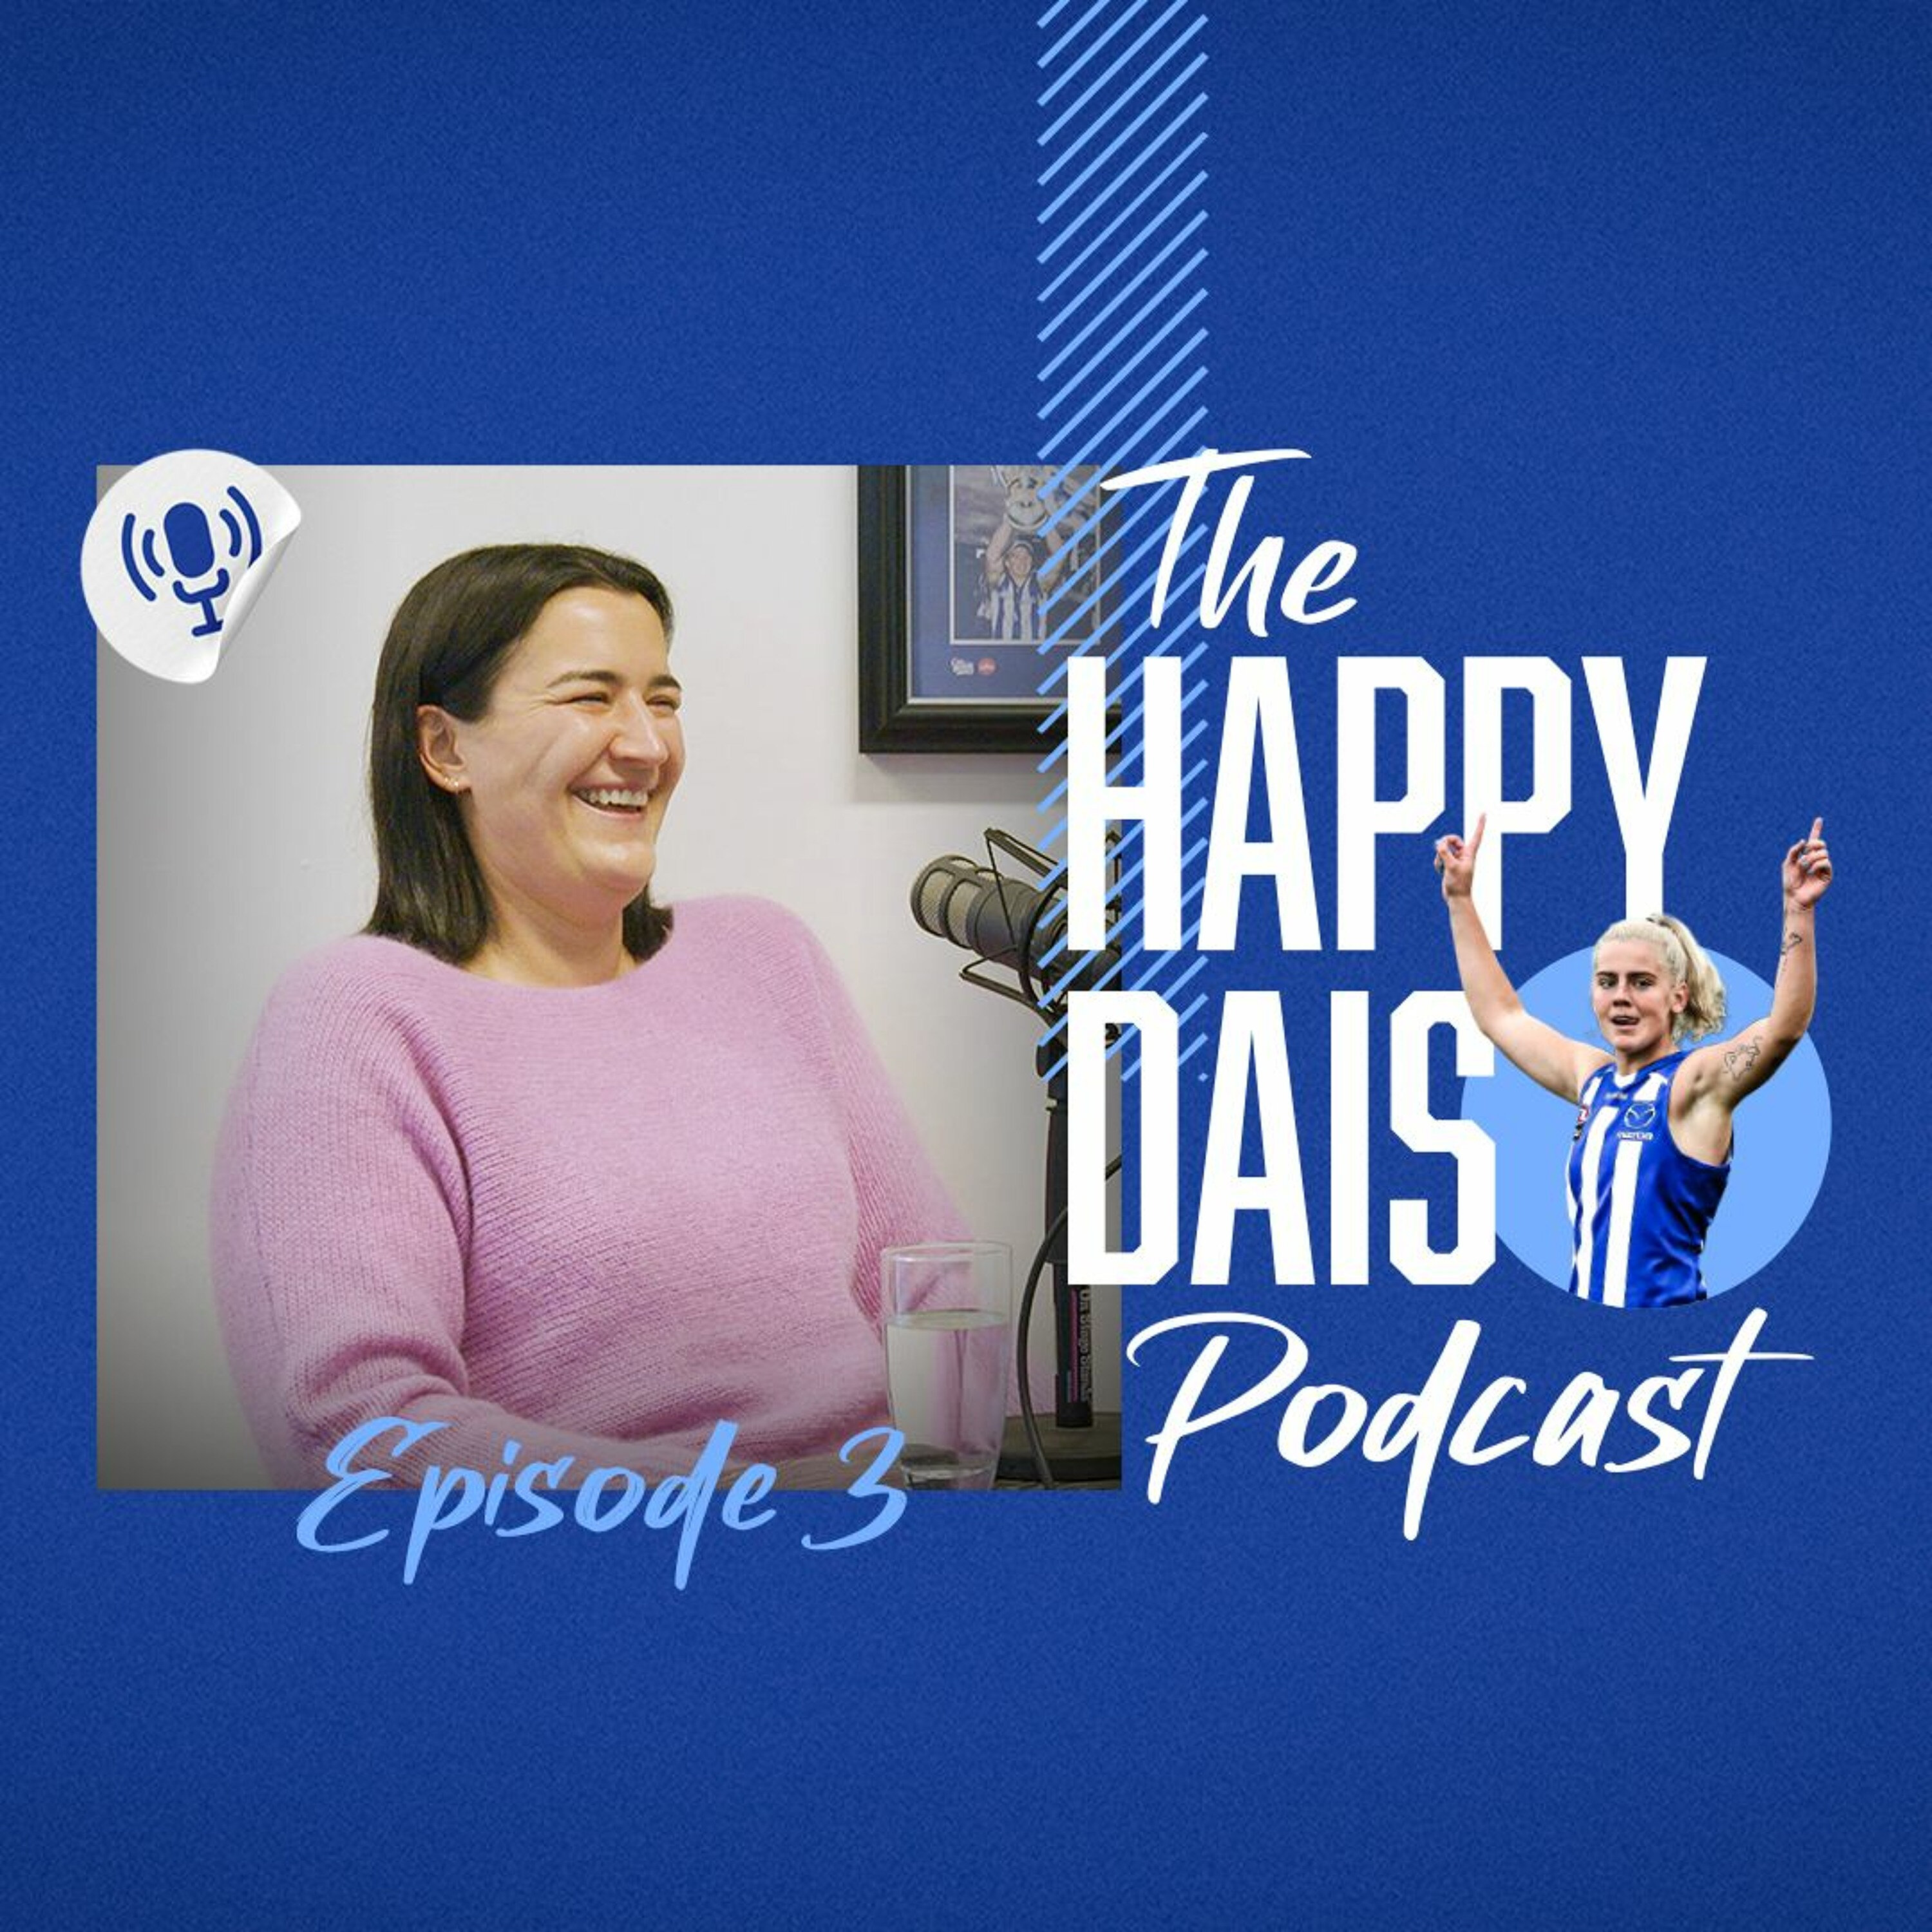 Laura Kane and Daisy Bateman (Episode 3 - ‘Happy Dais’ Podcast)